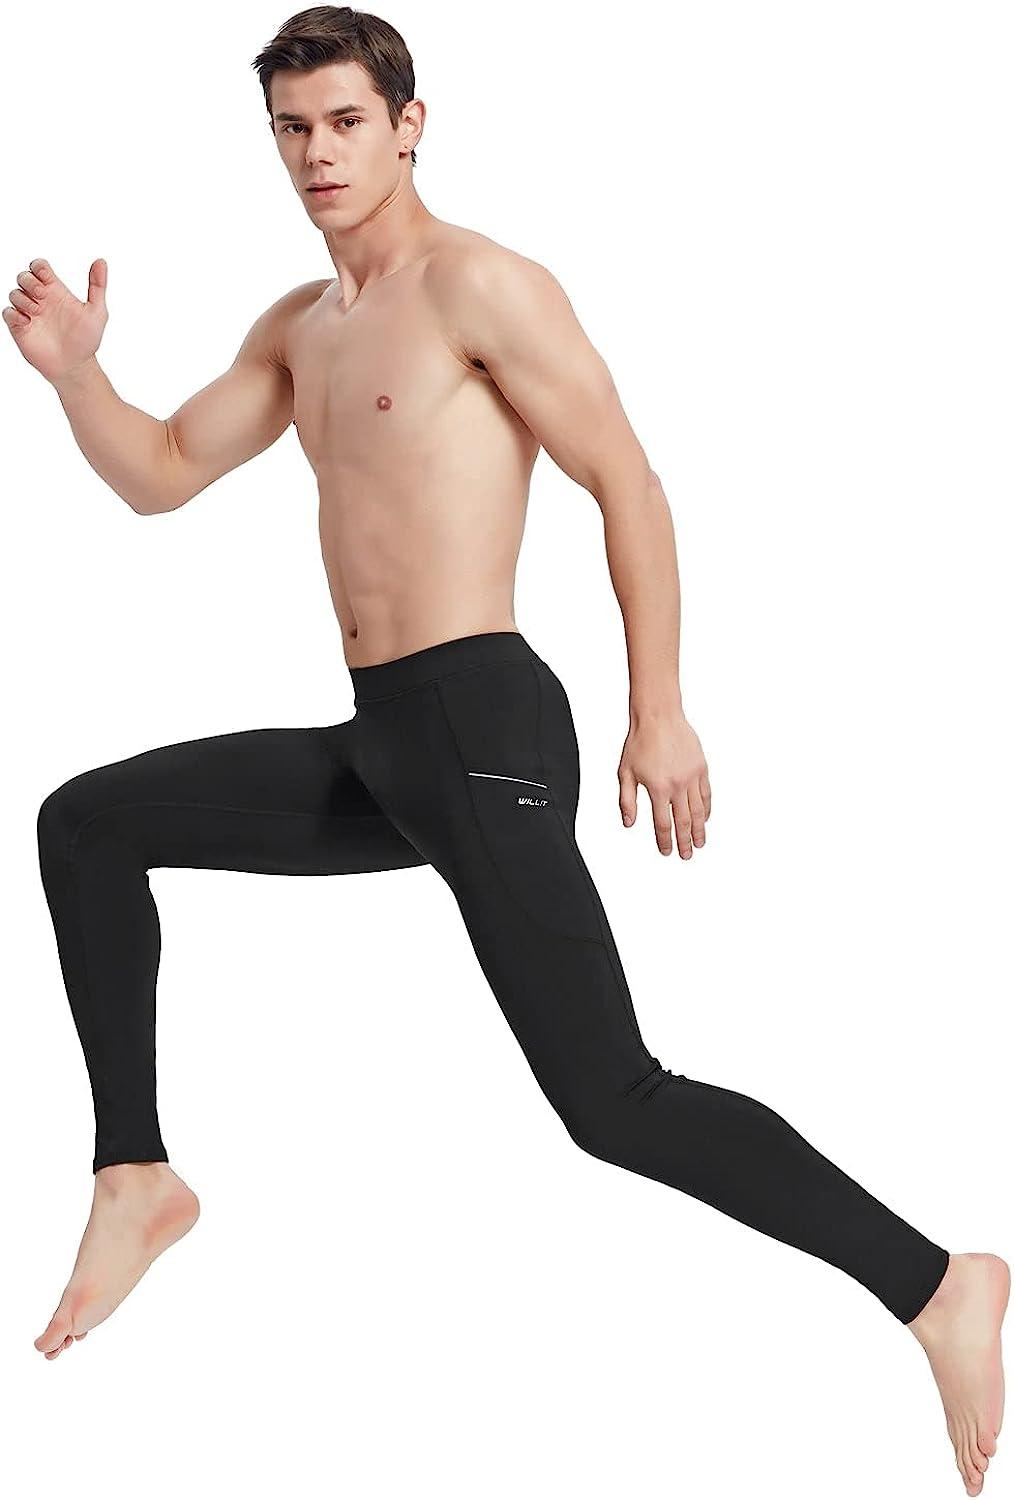 WILLIT Men's Active Yoga Leggings Pants Running Dance Tights with